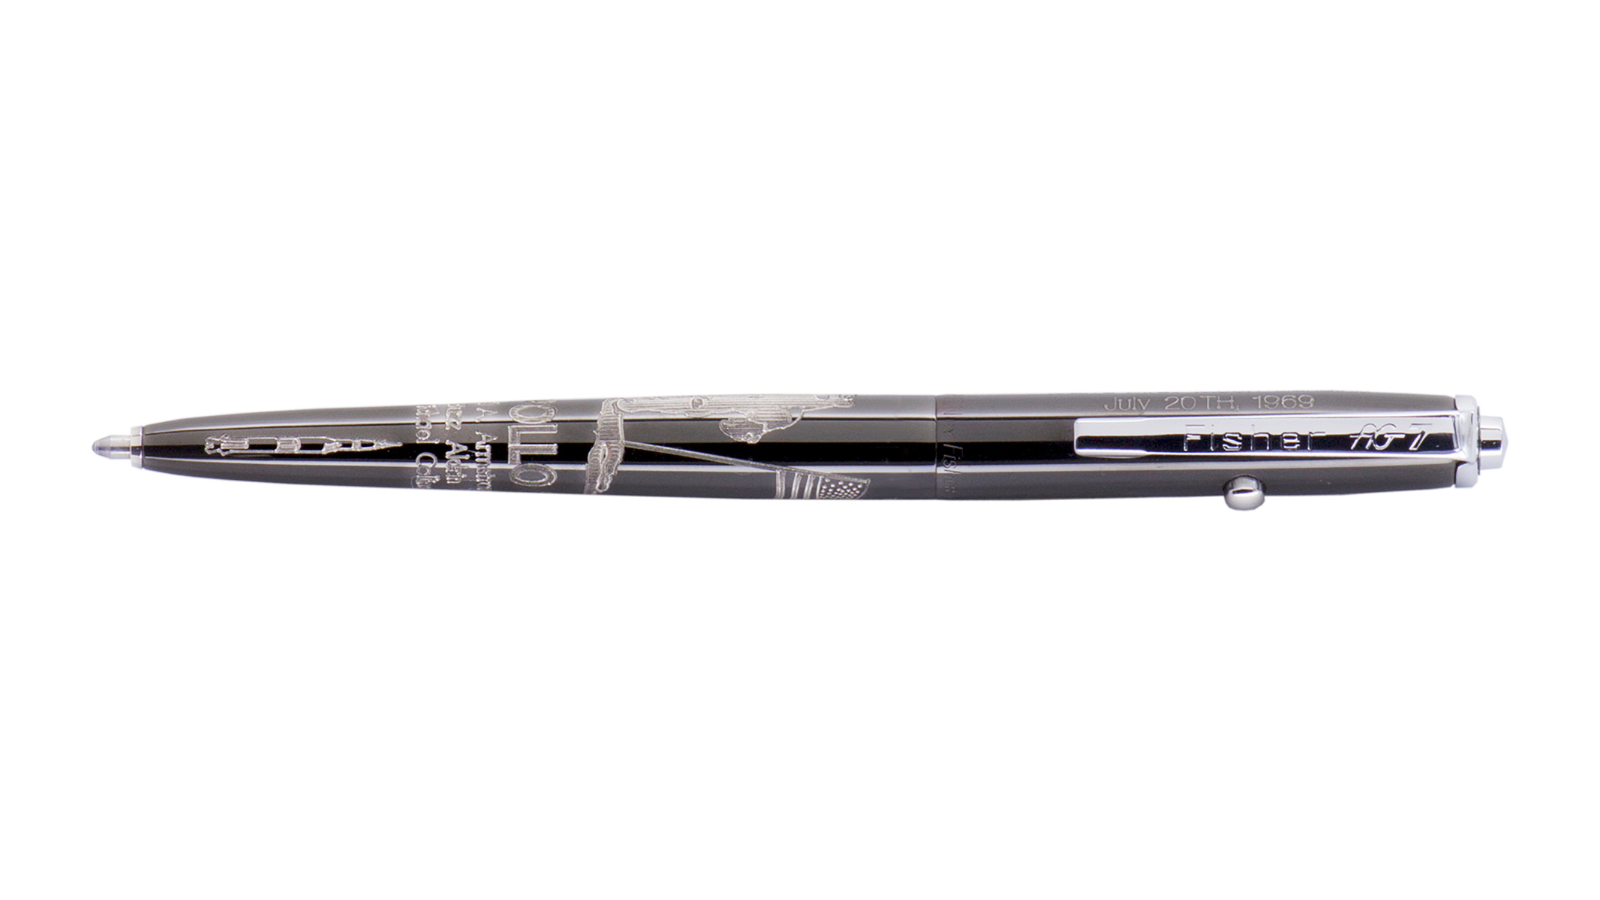 ag7-45le penna da collezione by Fulker